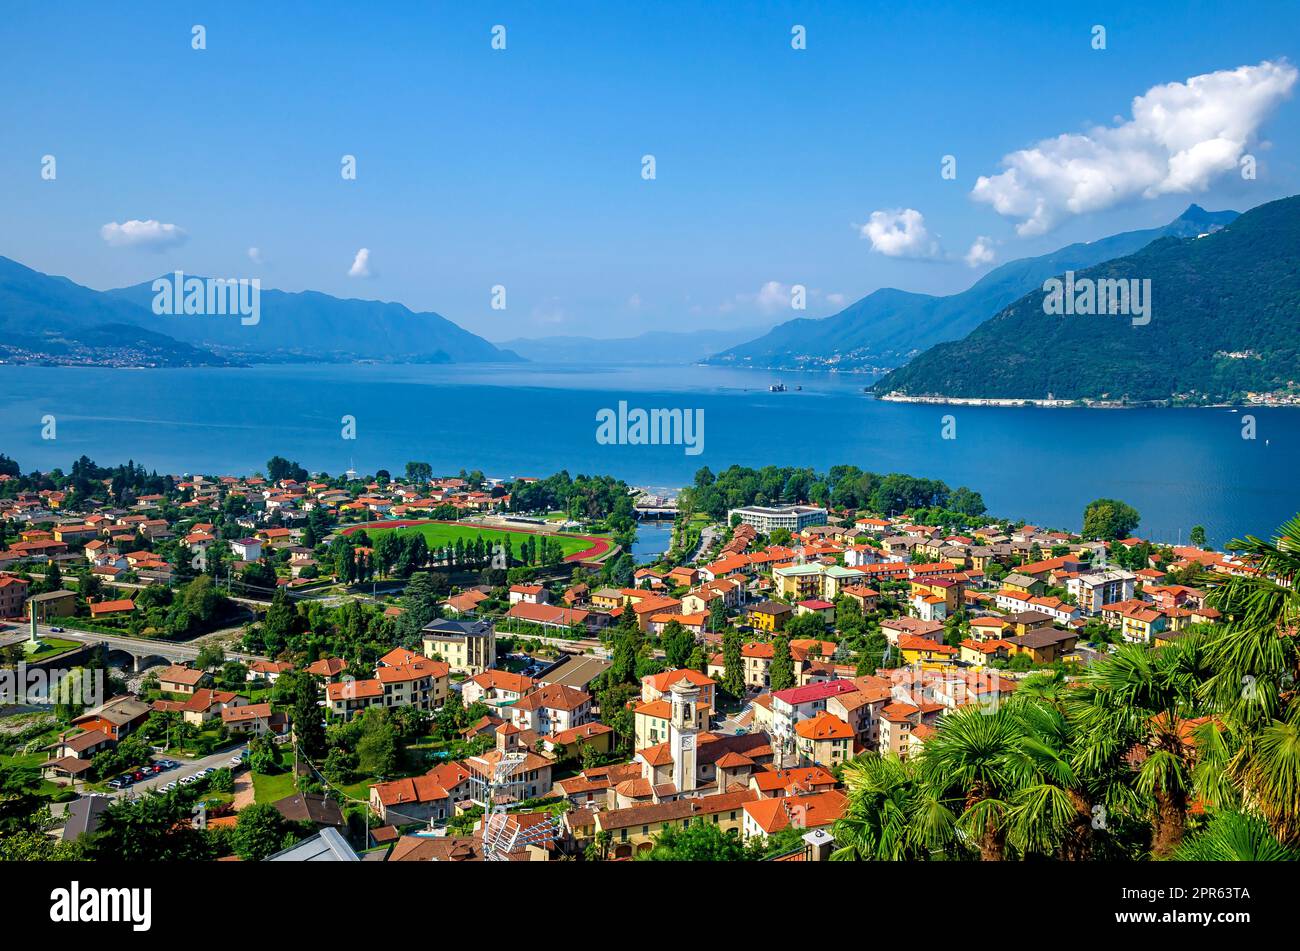 Maccagno on the Lake Maggiore (Lago Maggiore), located in the province of Varese in the Italian region Lombardy, Italy Stock Photo